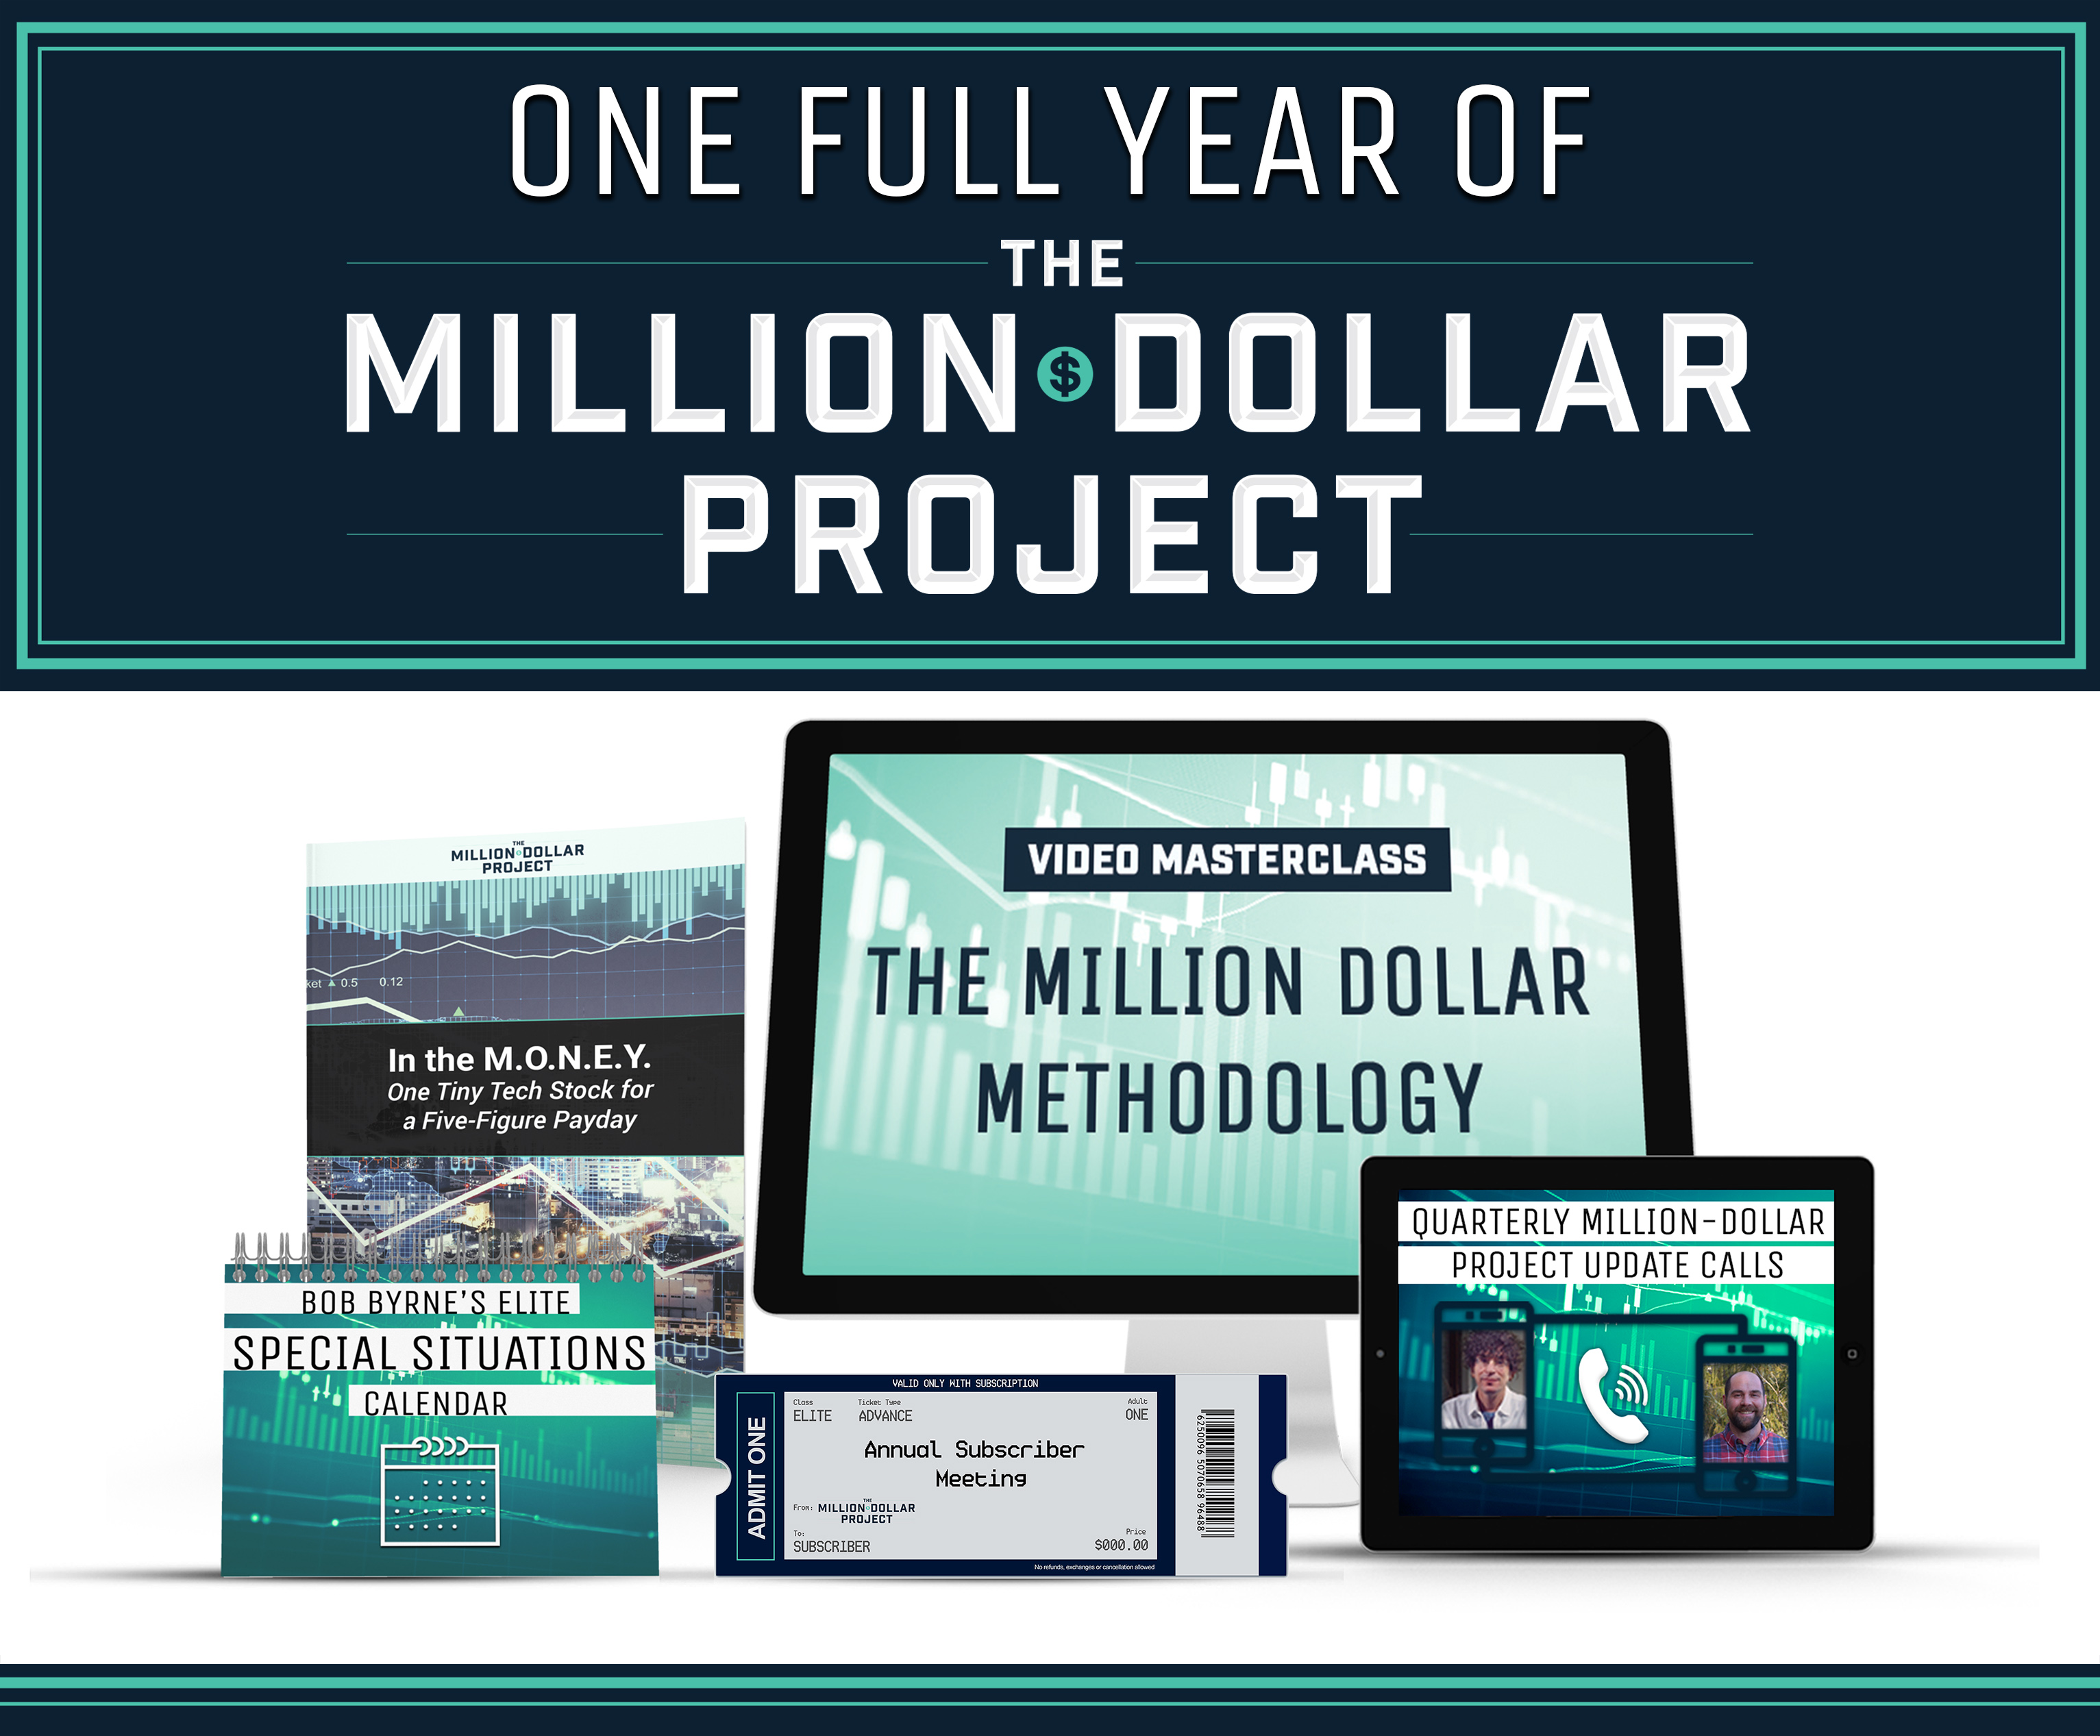 James Altucher - The Million Dollar Project